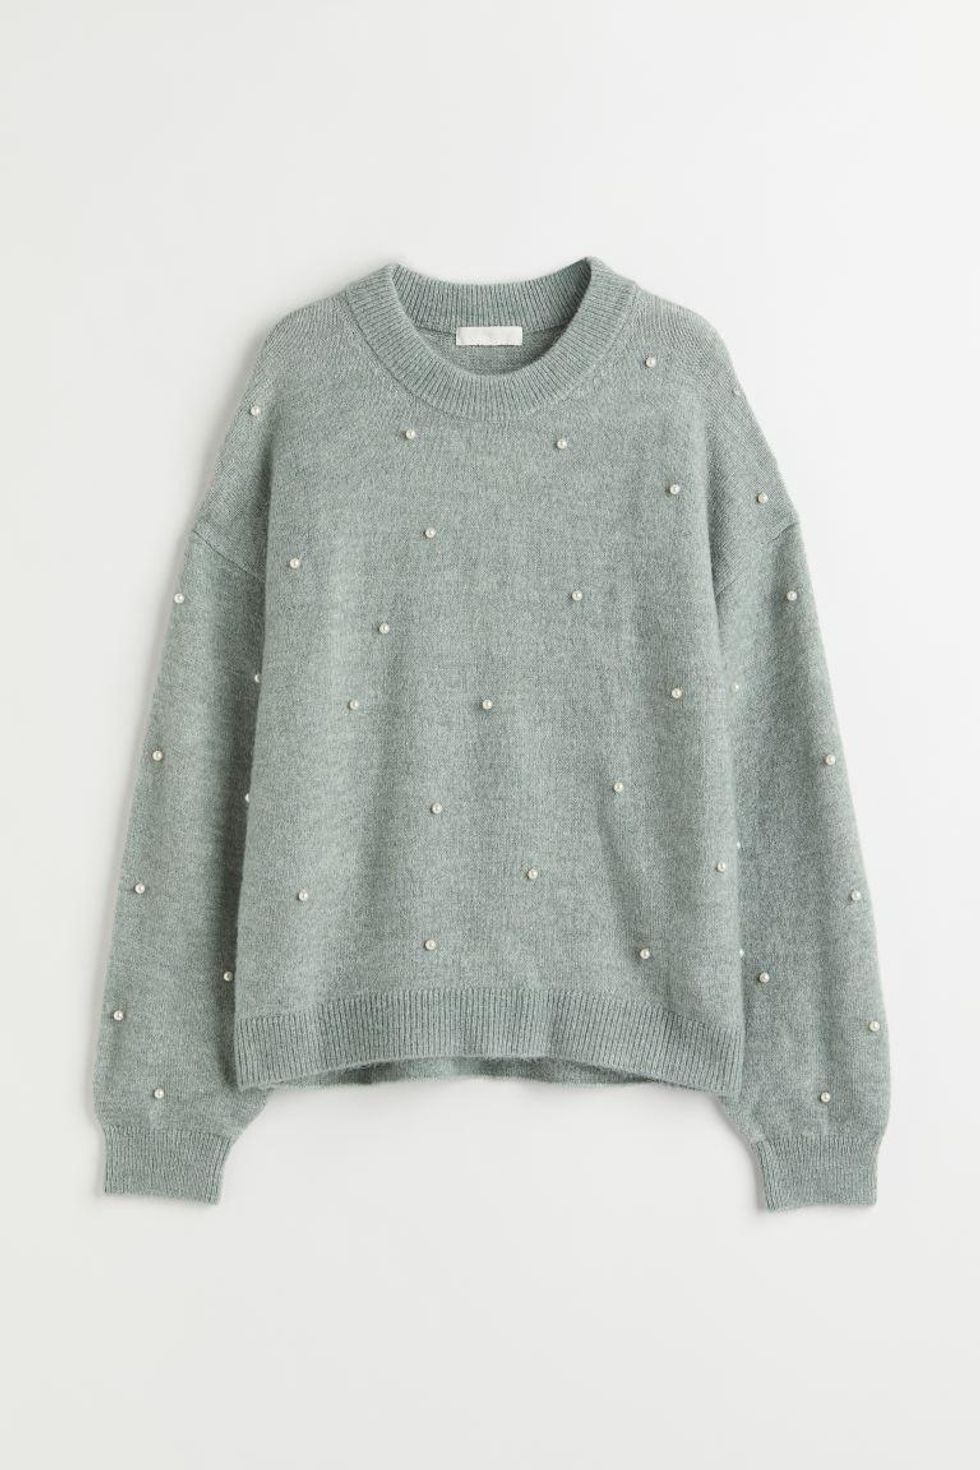 H&M Beaded Sweater